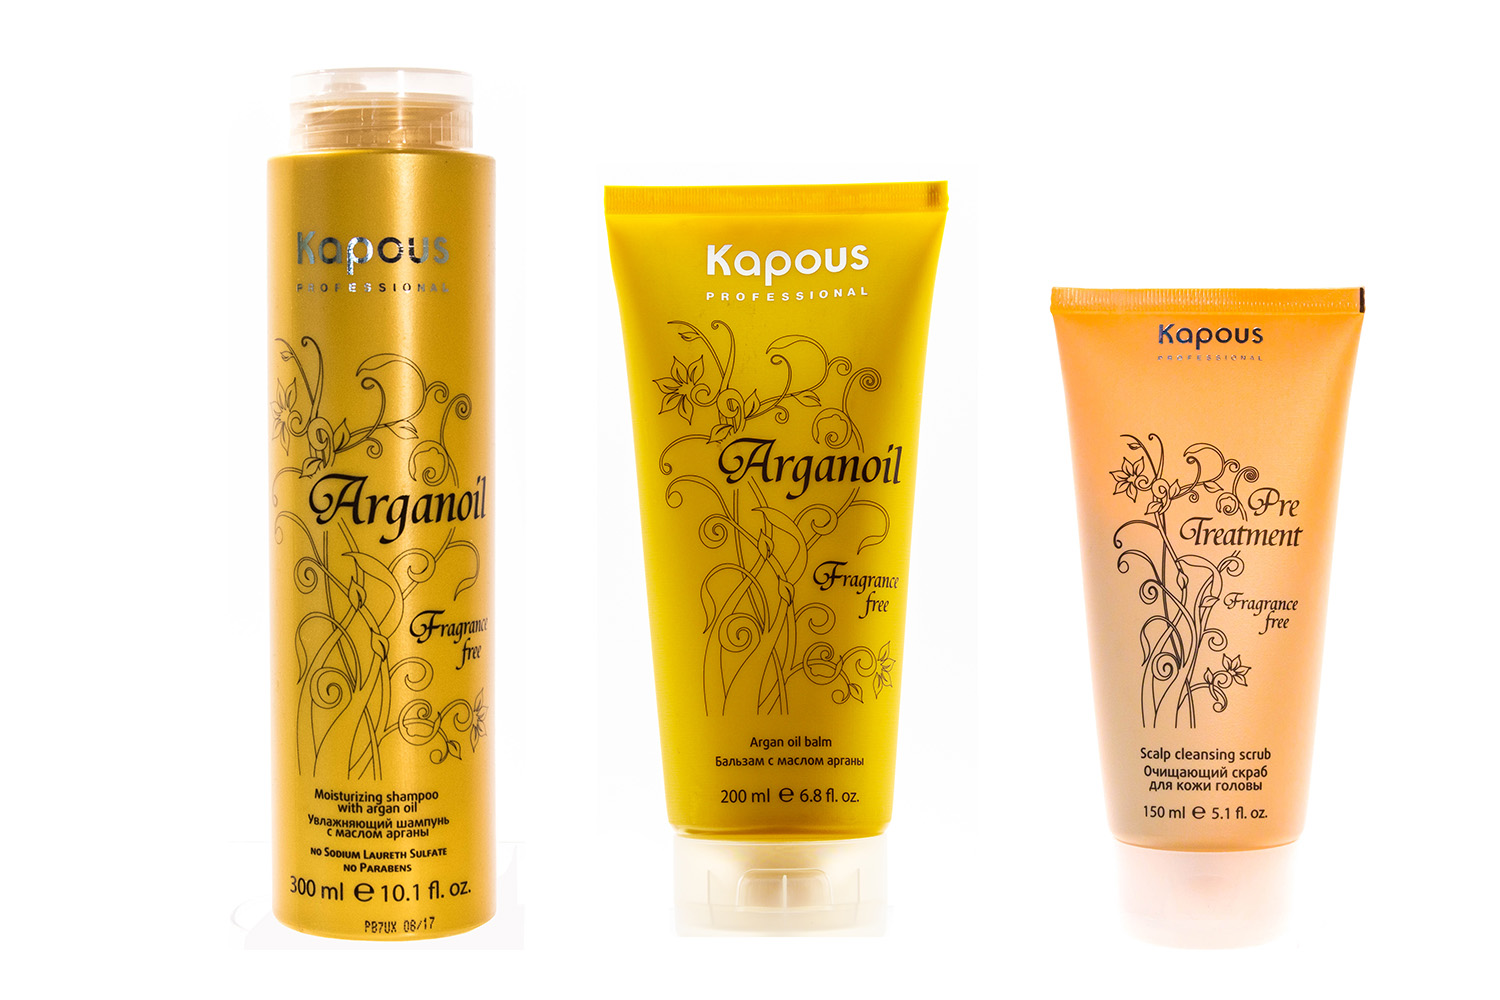 Купить Kapous Professional Набор для волос PreTreatment: скраб 150 мл + шампунь 300 мл + бальзам 200 мл, 1 шт (Kapous Professional, Arganoil), Италия